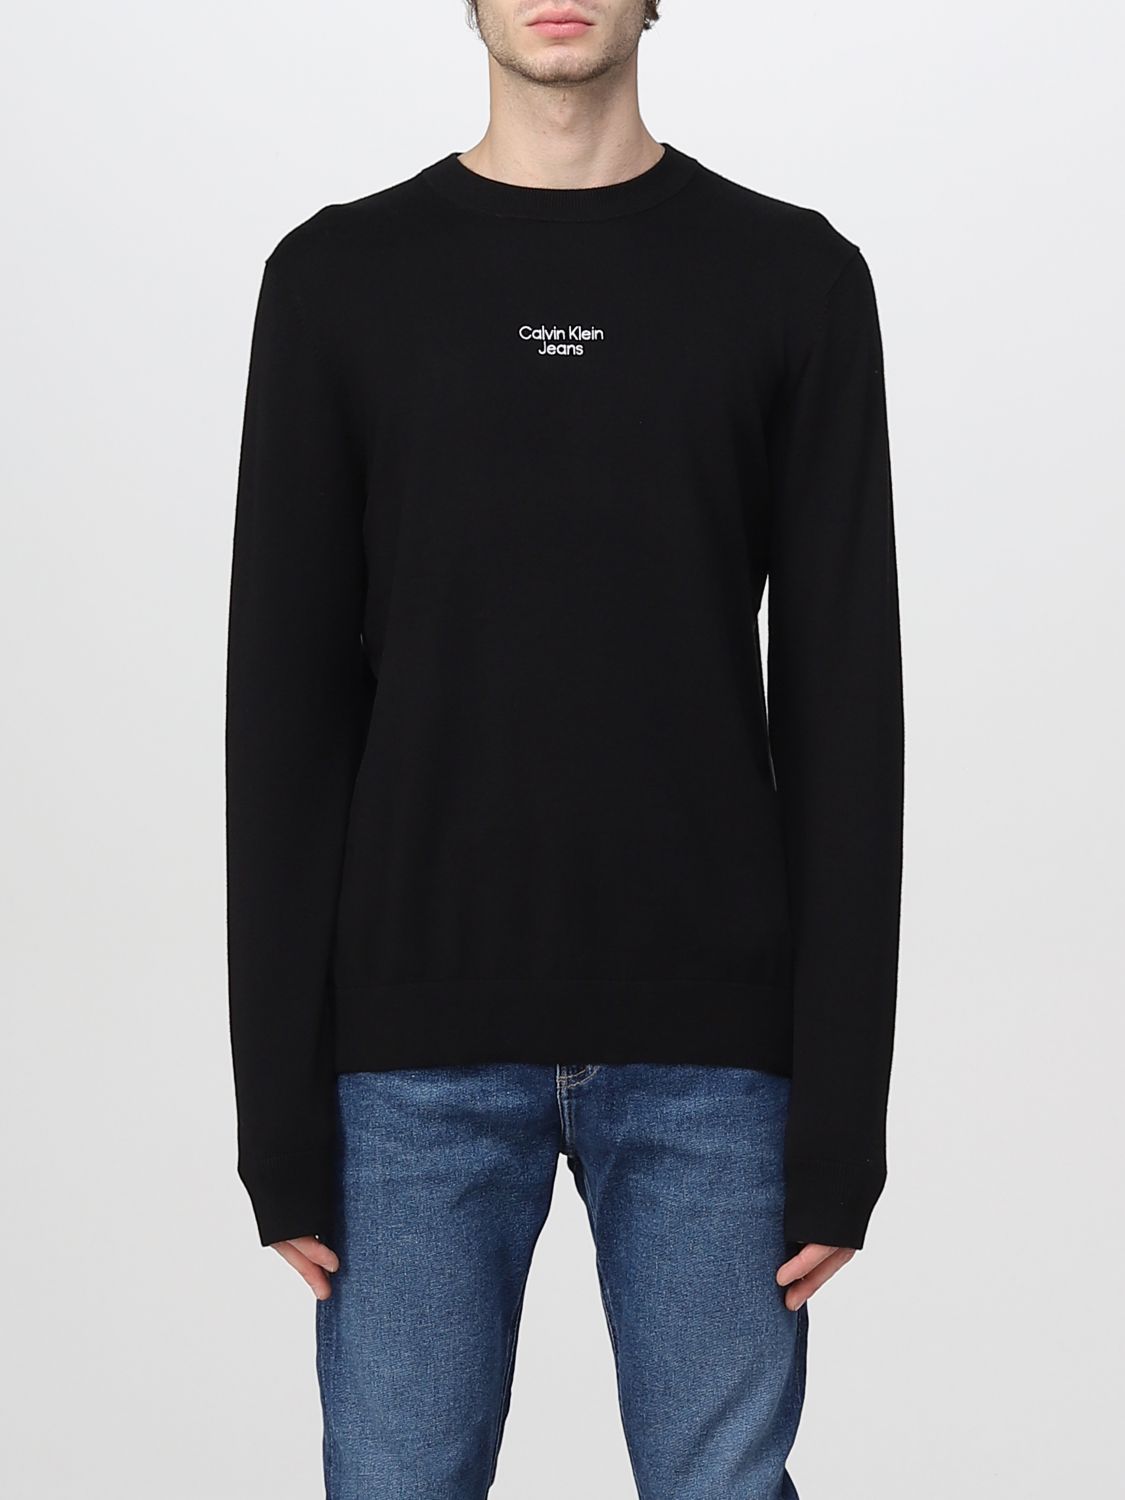 Introducir 33+ imagen calvin klein jeans sweater black